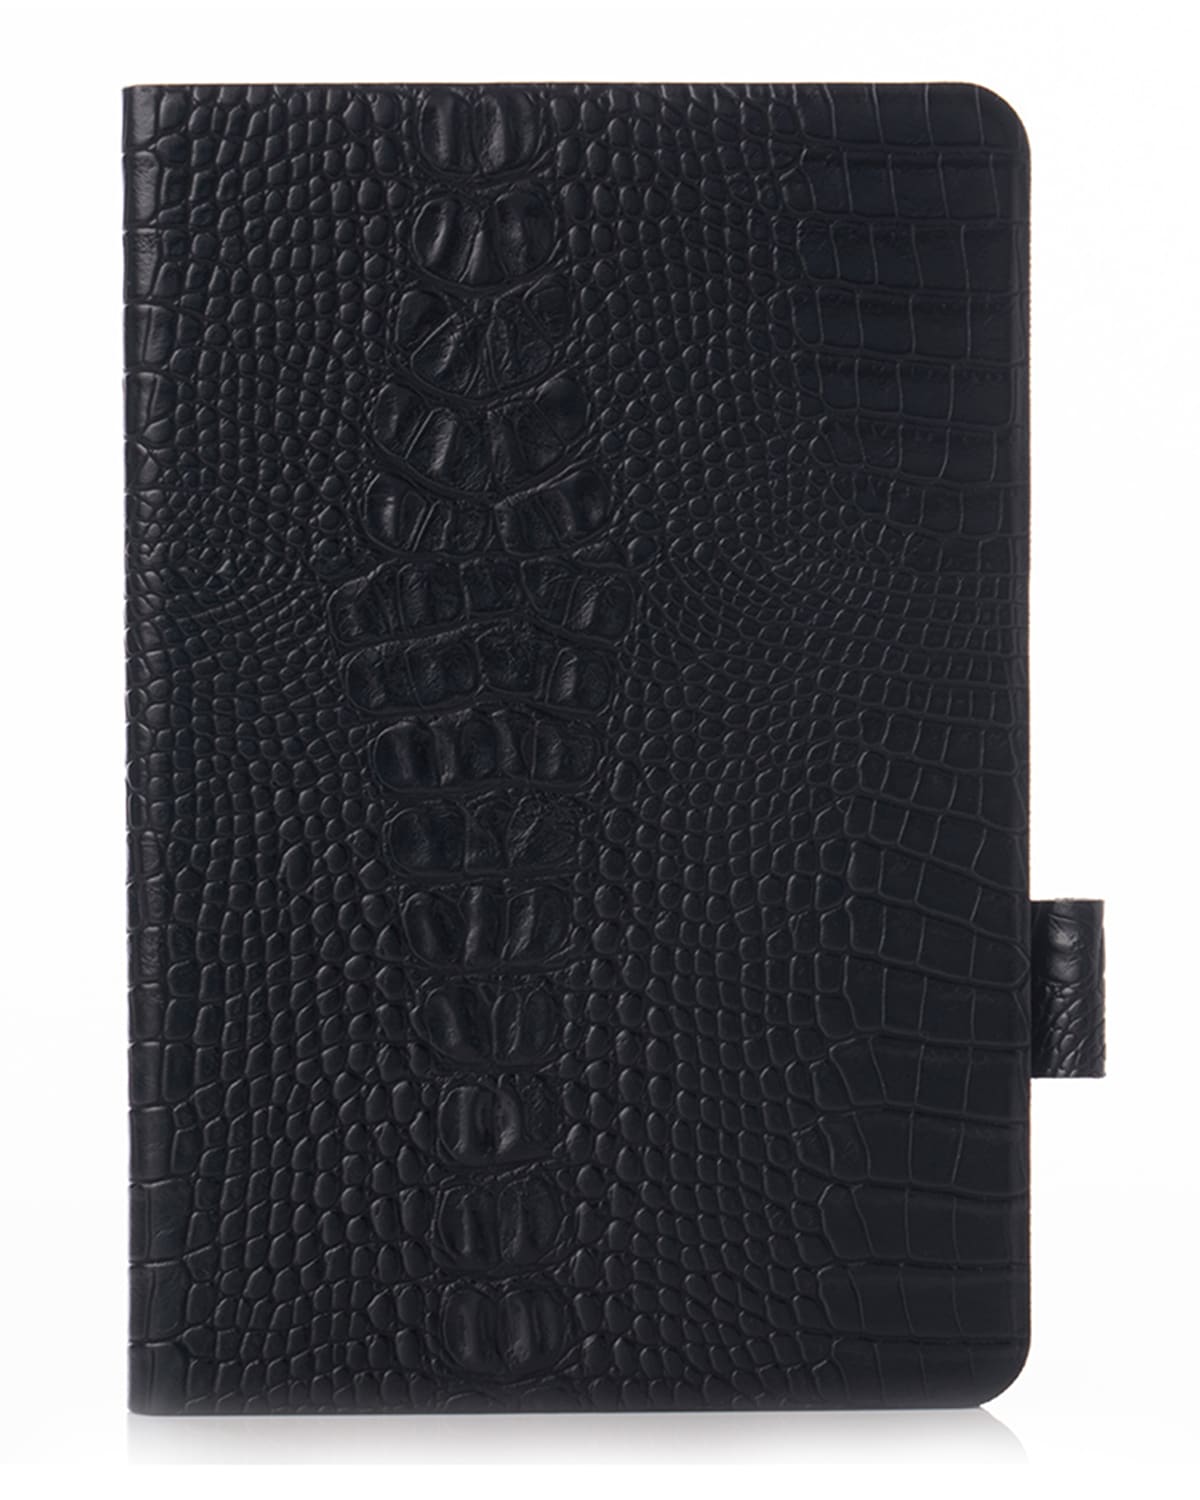 Chic Geeks Faux Crocodile 9.7 Ipad Case - 5th & 6th Generation In Black